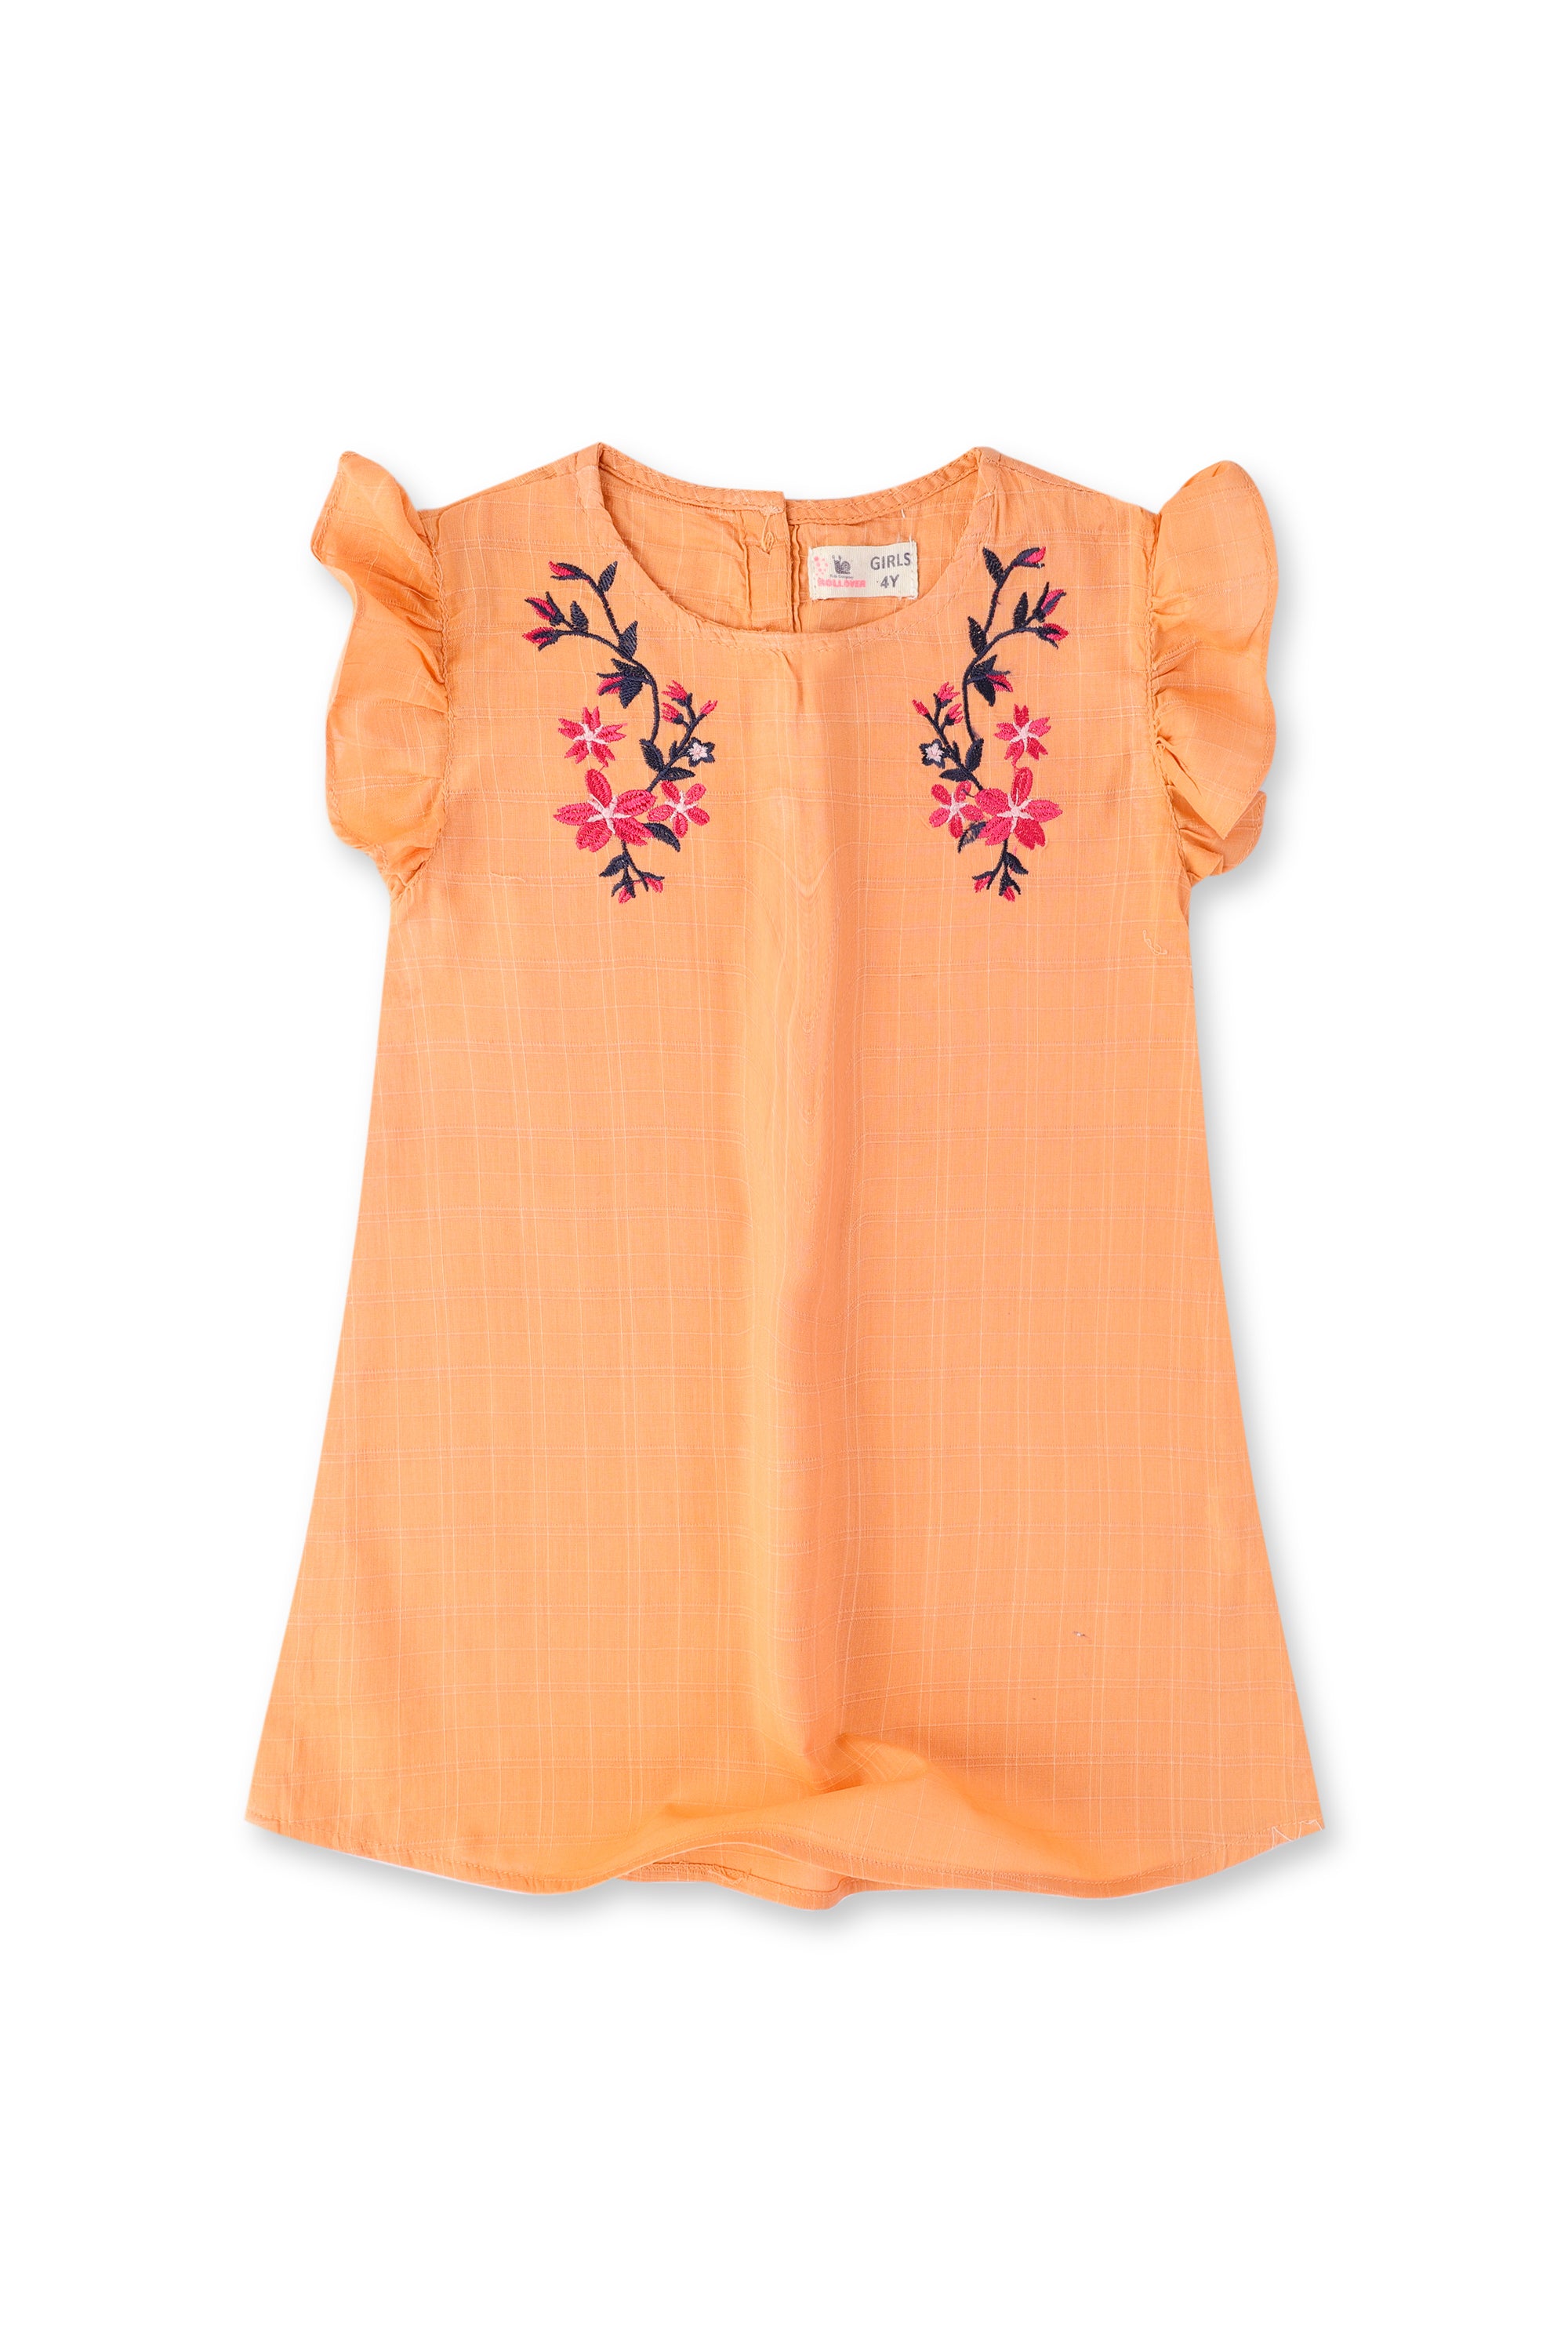 Girls Peach Checkered Embroidered Shirt